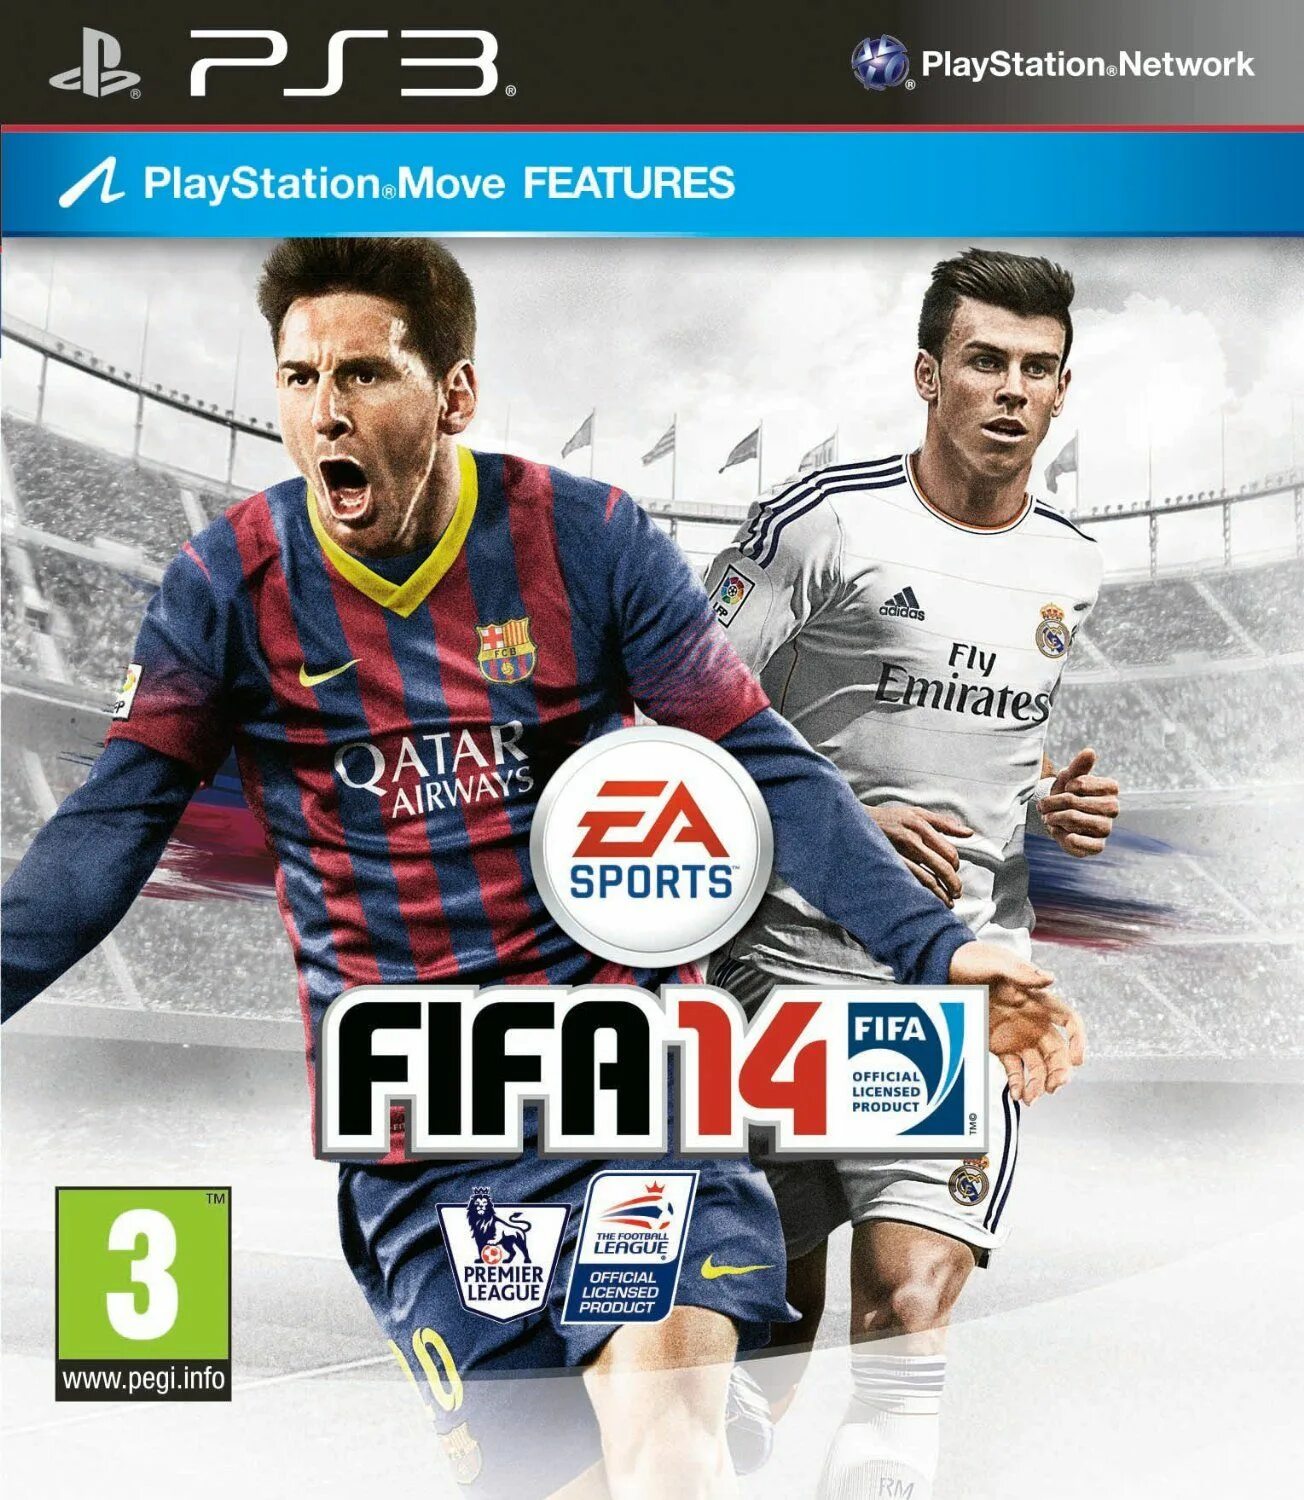 Fifa цена. ФИФА 14 Xbox 360. FIFA 14 ps3 (русская версия). Xbox 360 игры ФИФА. ФИФА на иксбокс 360.